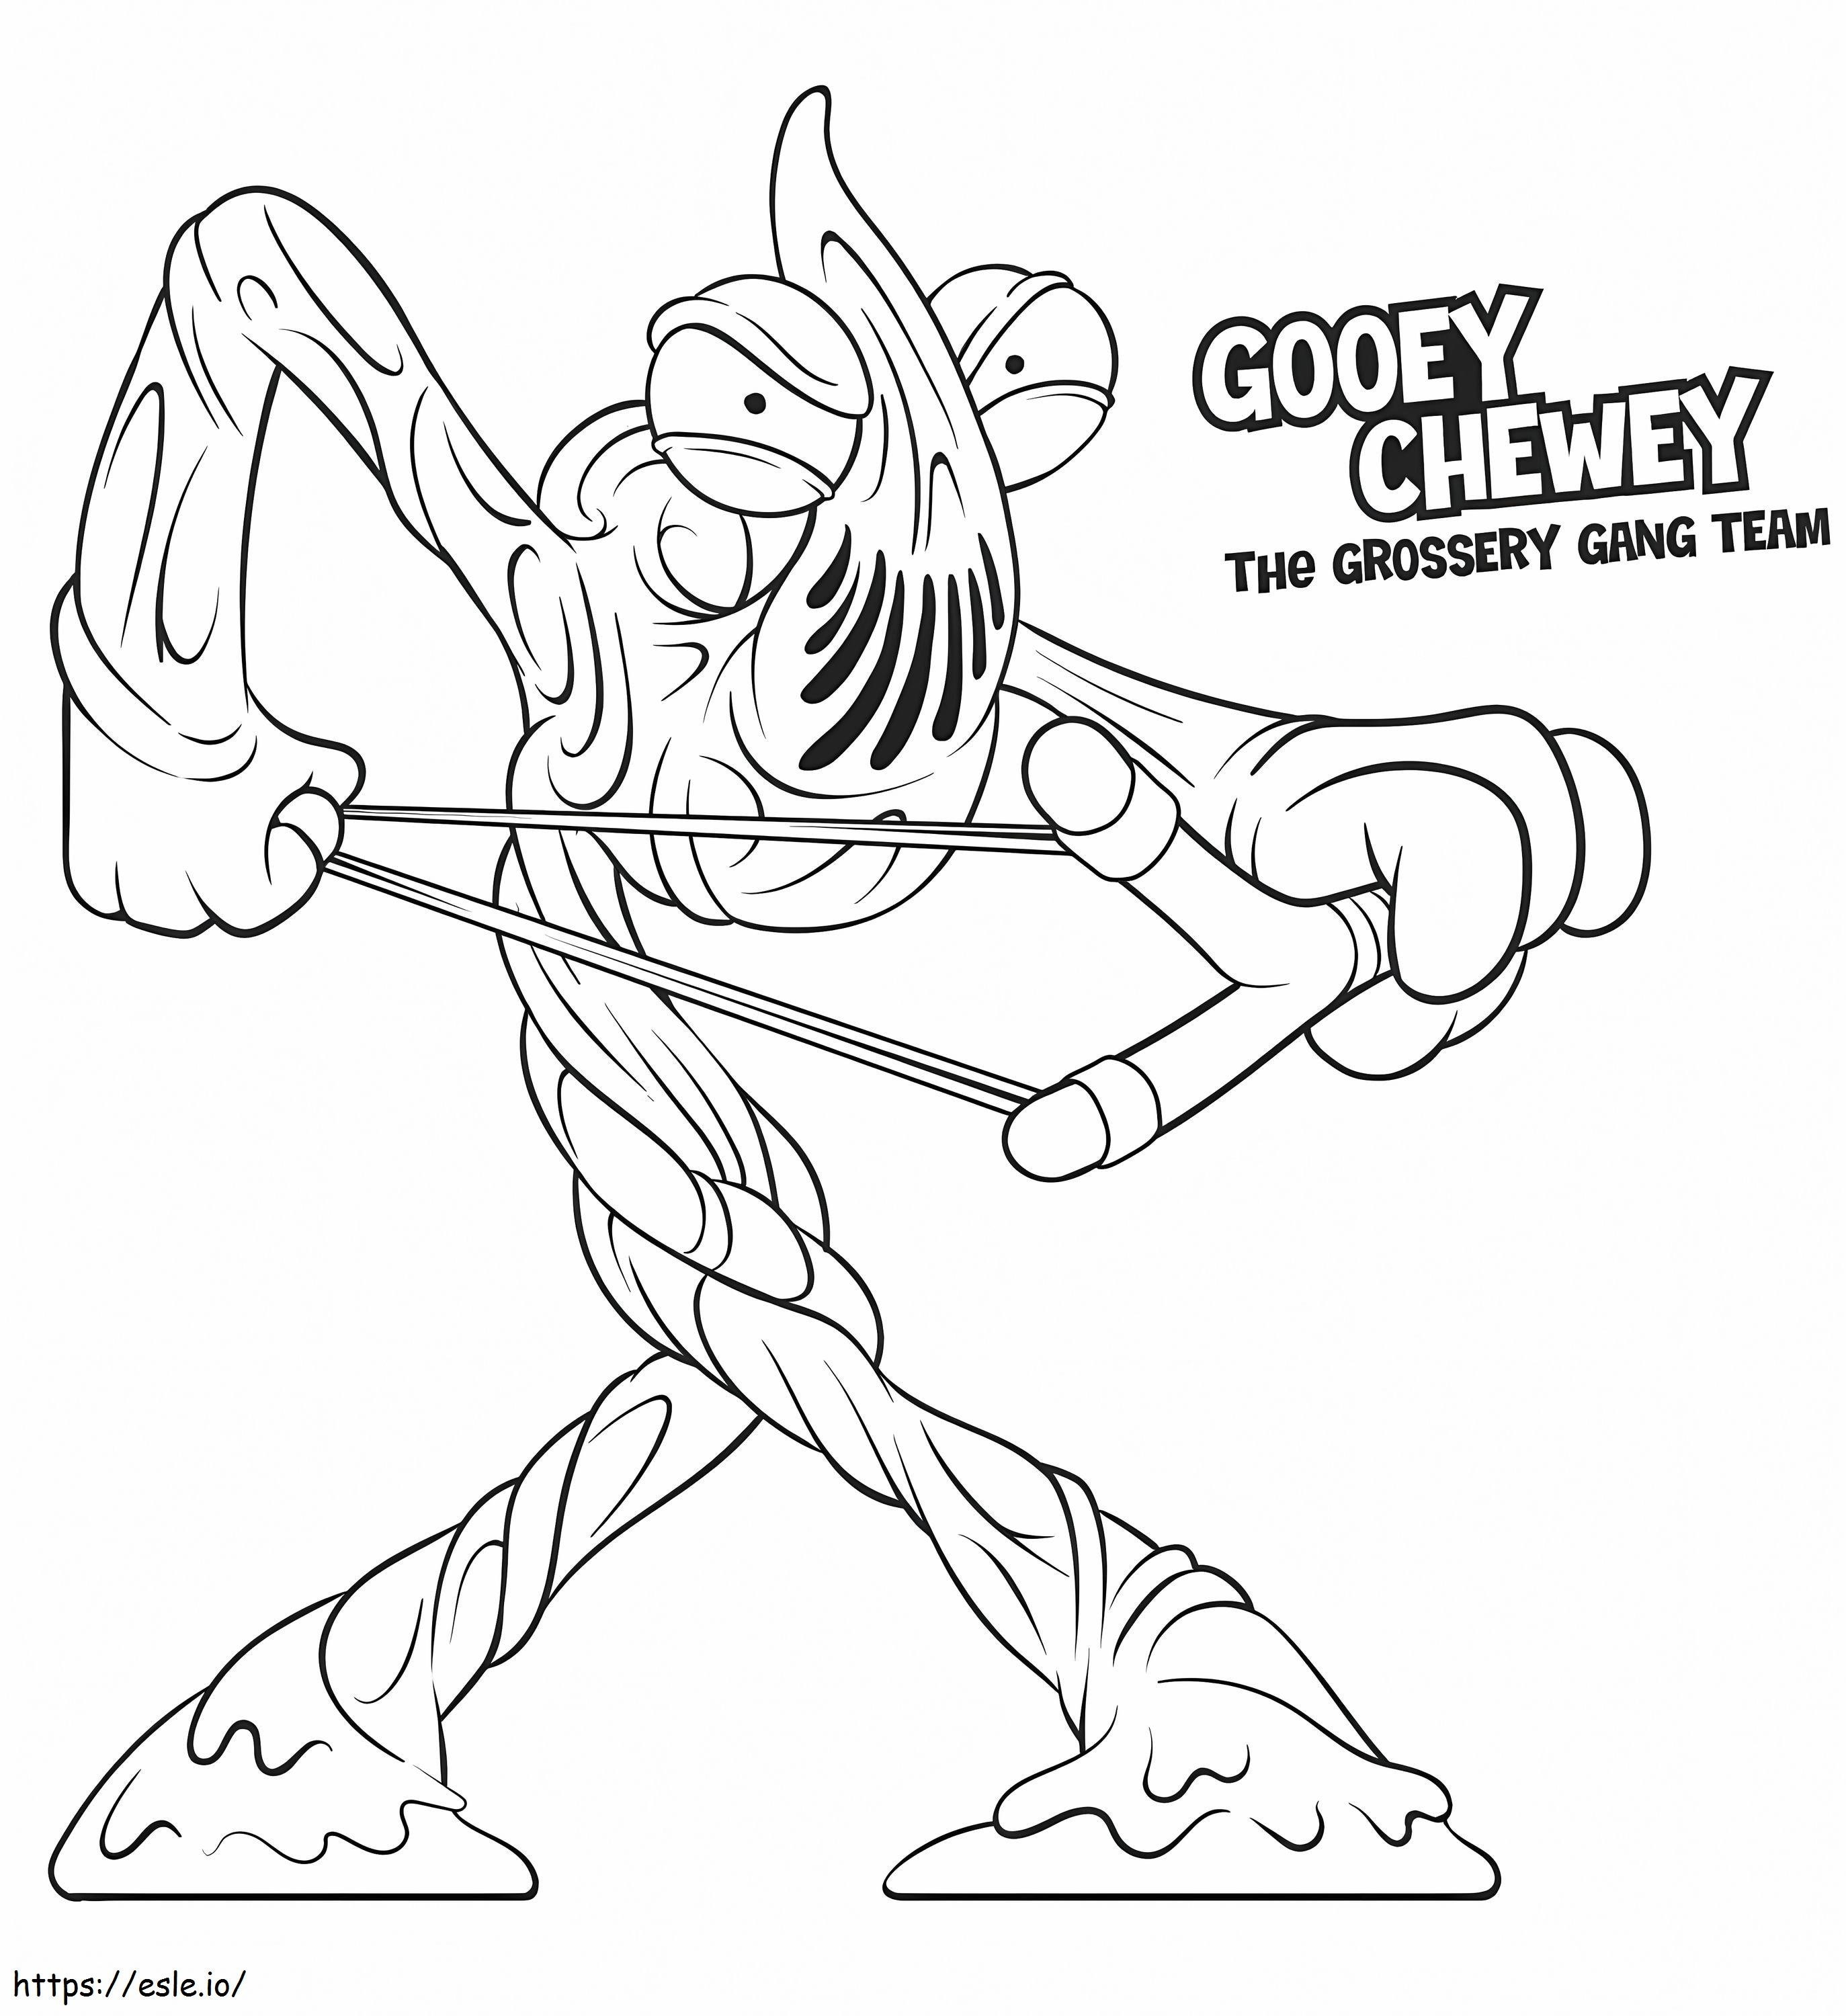 Gooey Chewey Grossery Gang de colorat